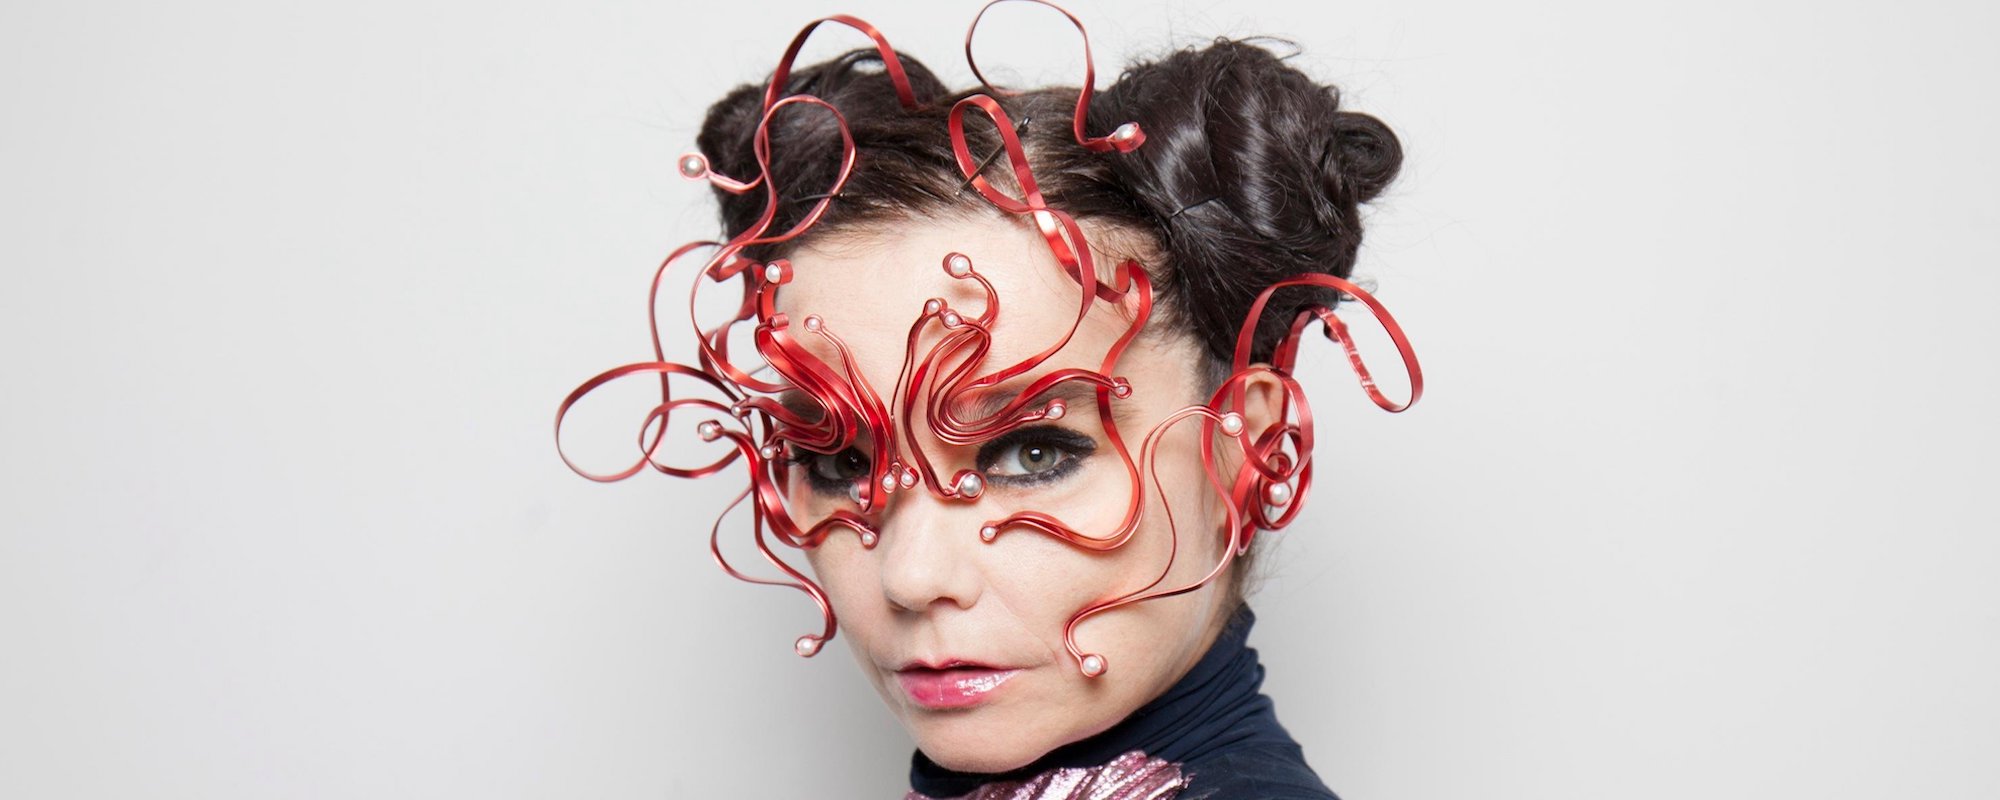 Björk Releases “Biological Techno” on Forthcoming Album ‘Fossora’